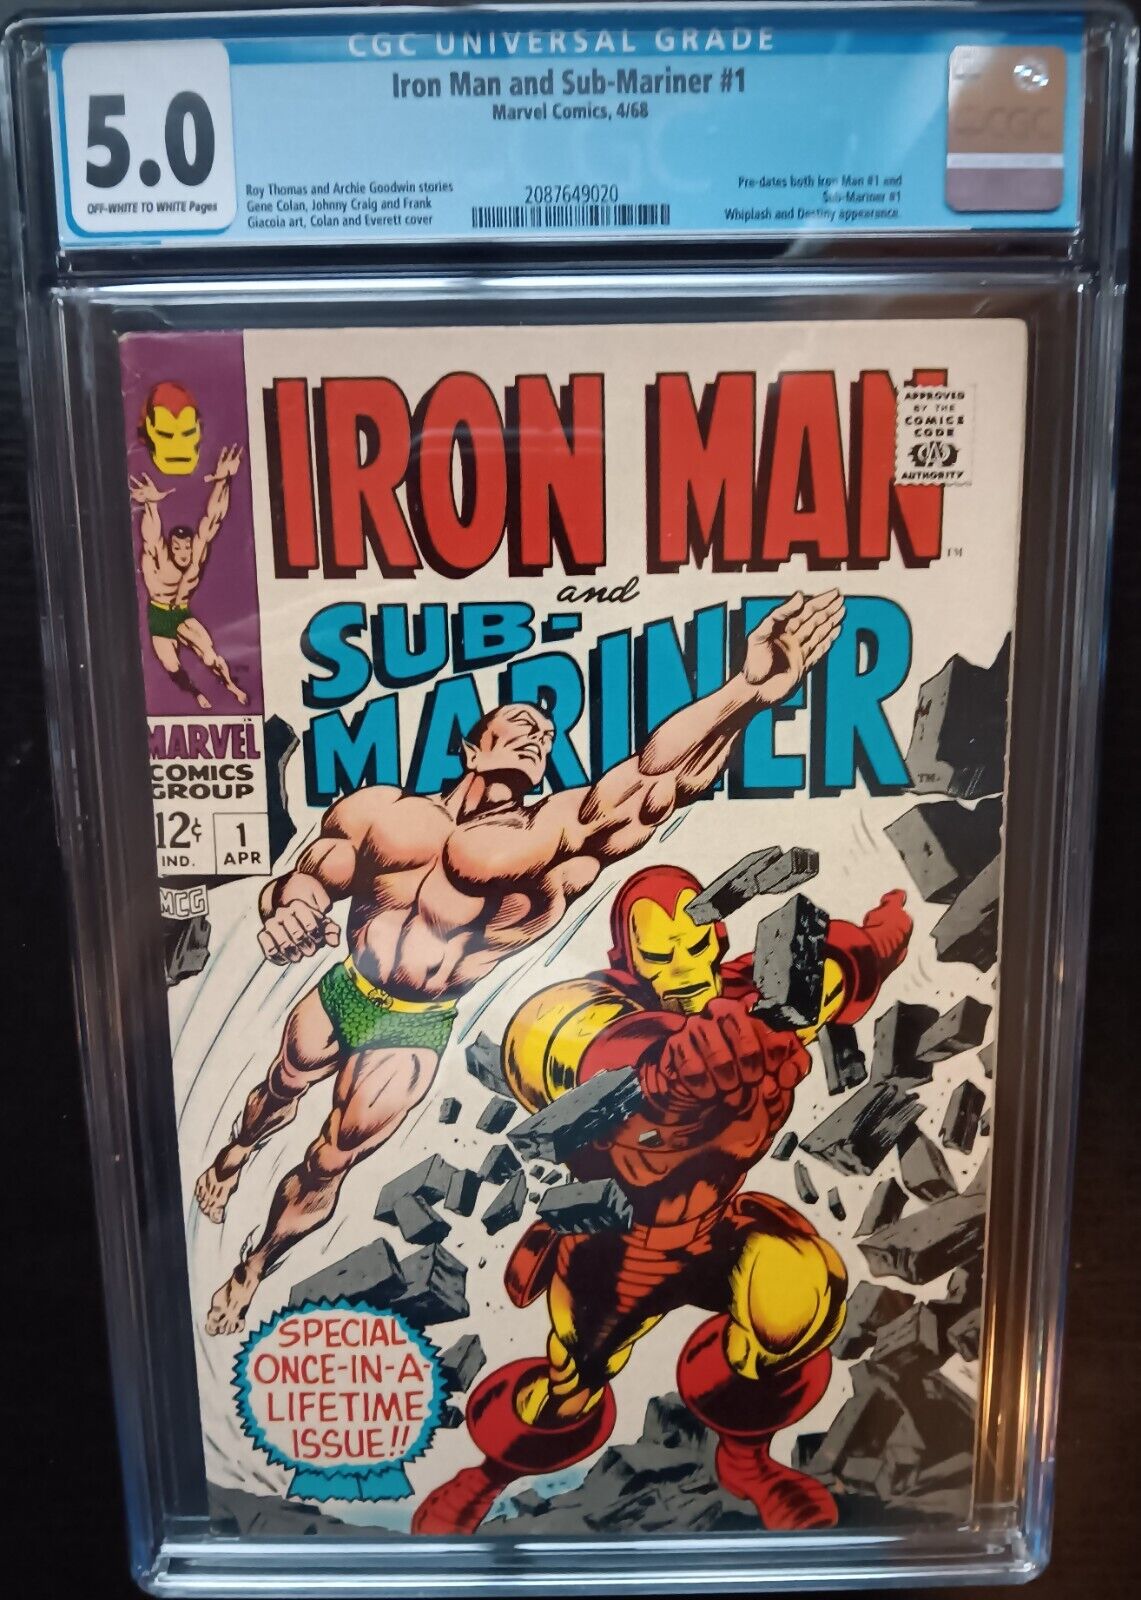 Iron Man & Sub-Mariner #1 (Marvel, April 1968)